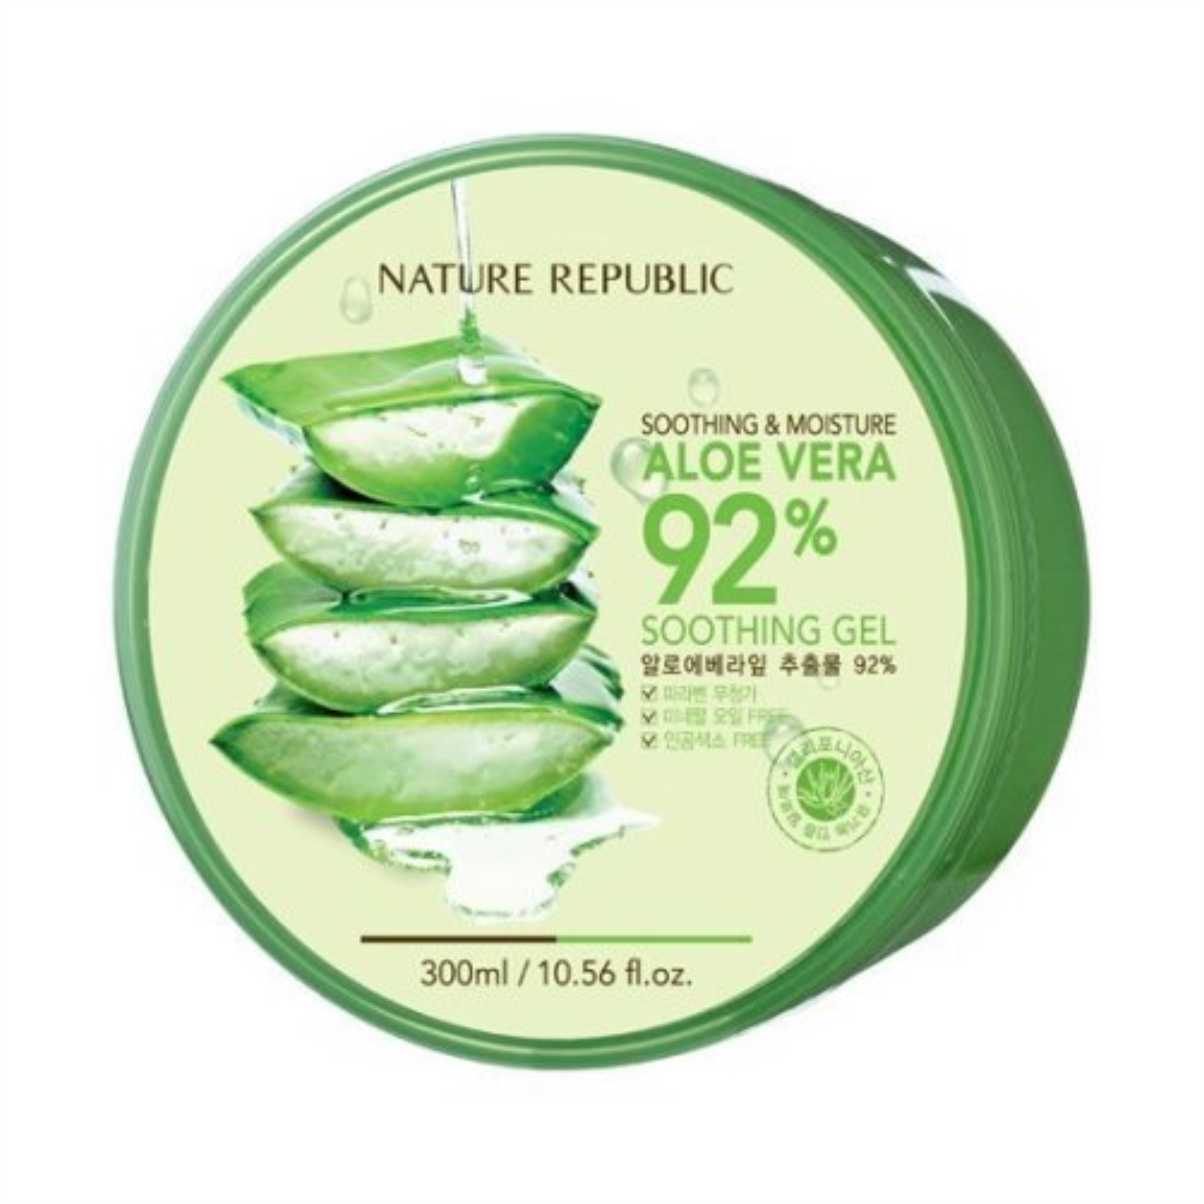 Nature Republic Aloe Vera 92% Soothing Gel HallYu